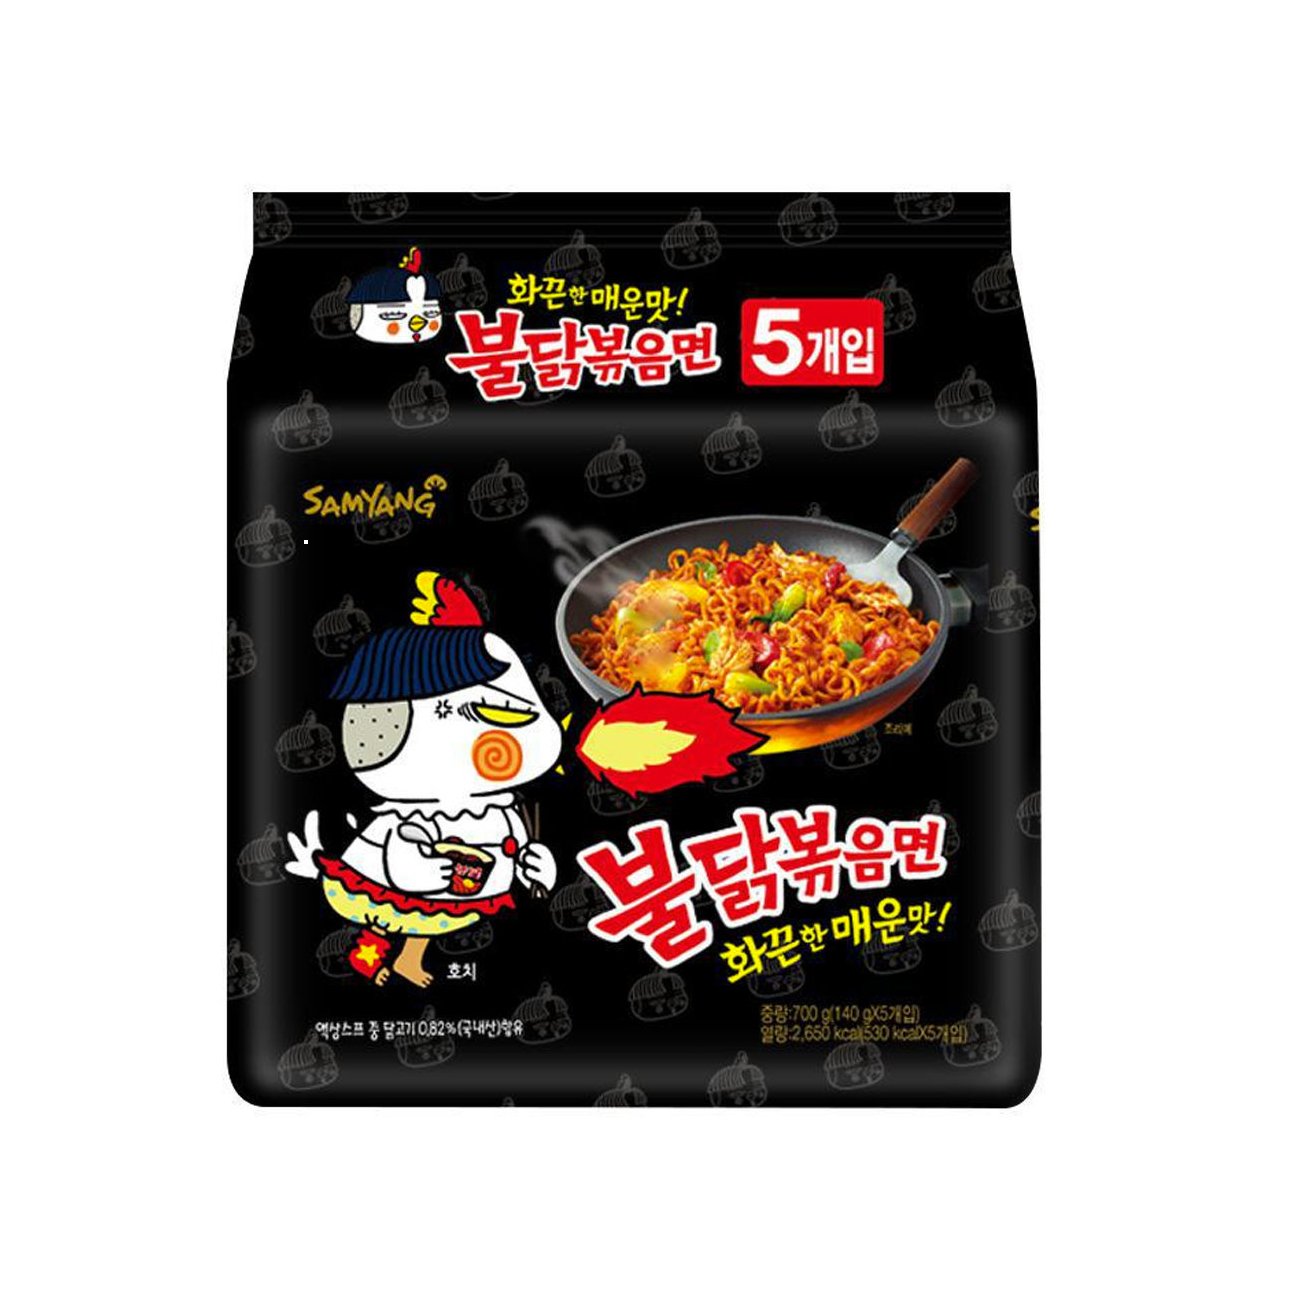 Buldak Hot Chicken Flavour Ramen 5 Pack 700g by Samyang